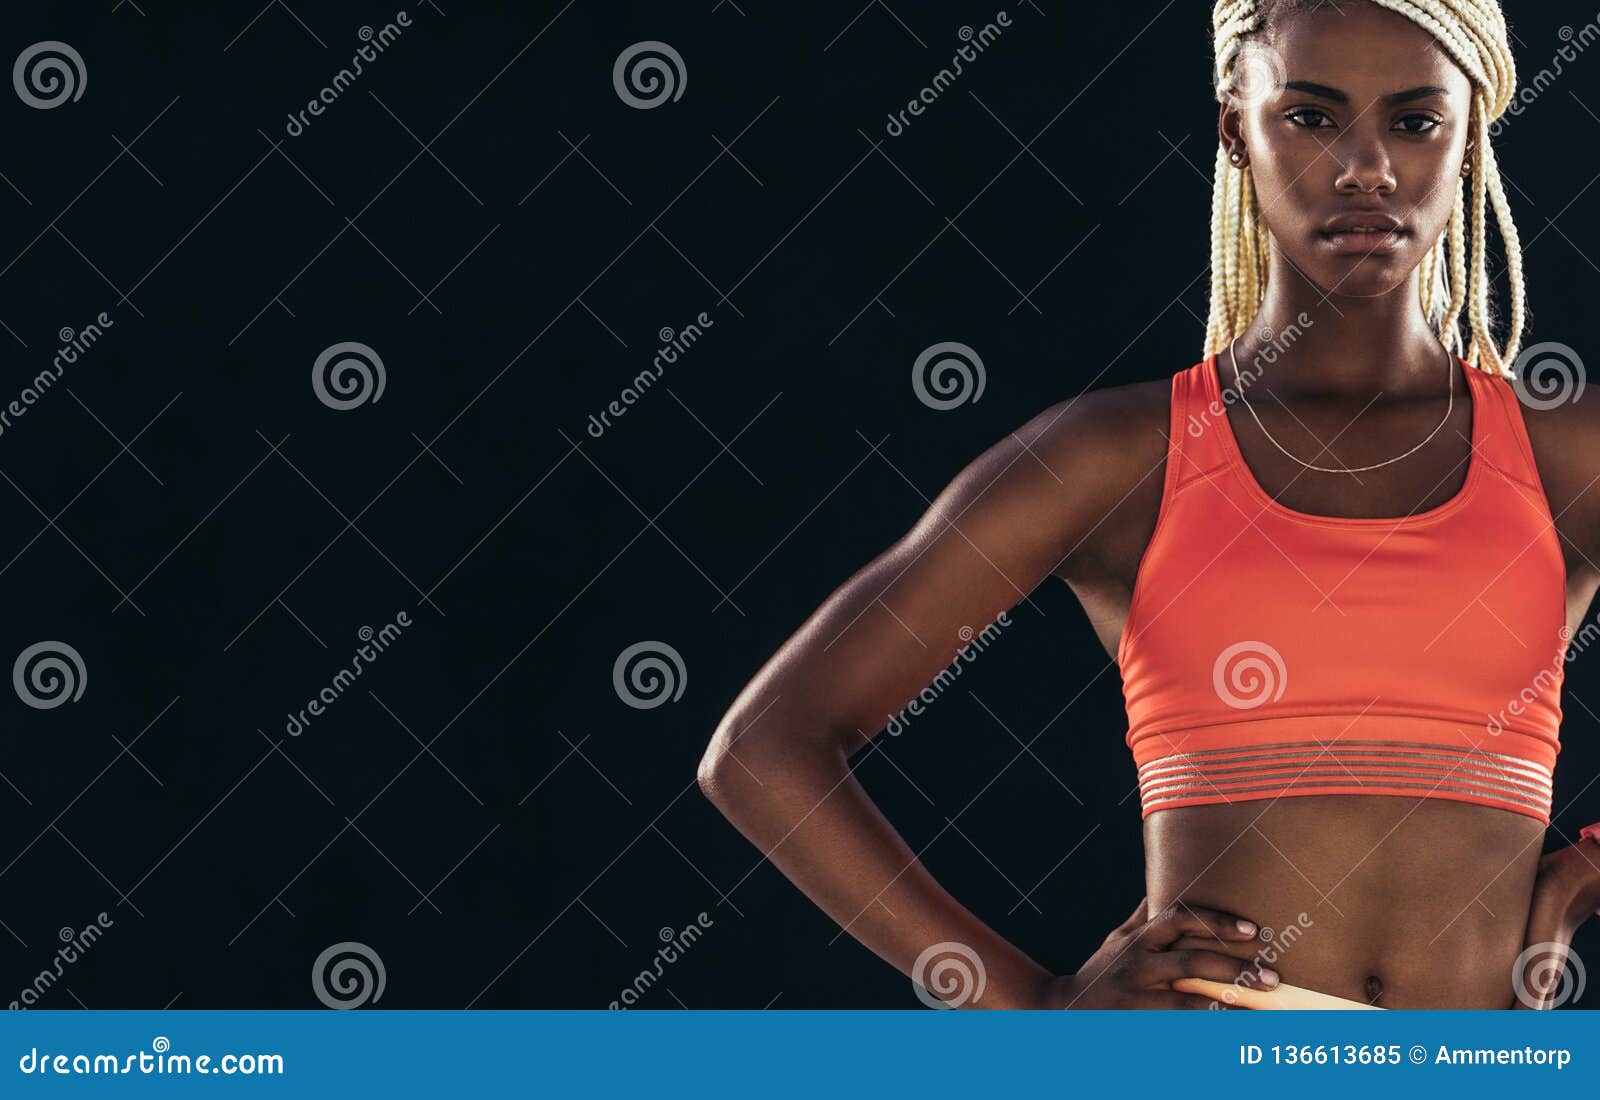 https://thumbs.dreamstime.com/z/portrait-female-athlete-fitness-clothes-portrait-female-athlete-black-background-woman-sprinter-fitness-136613685.jpg